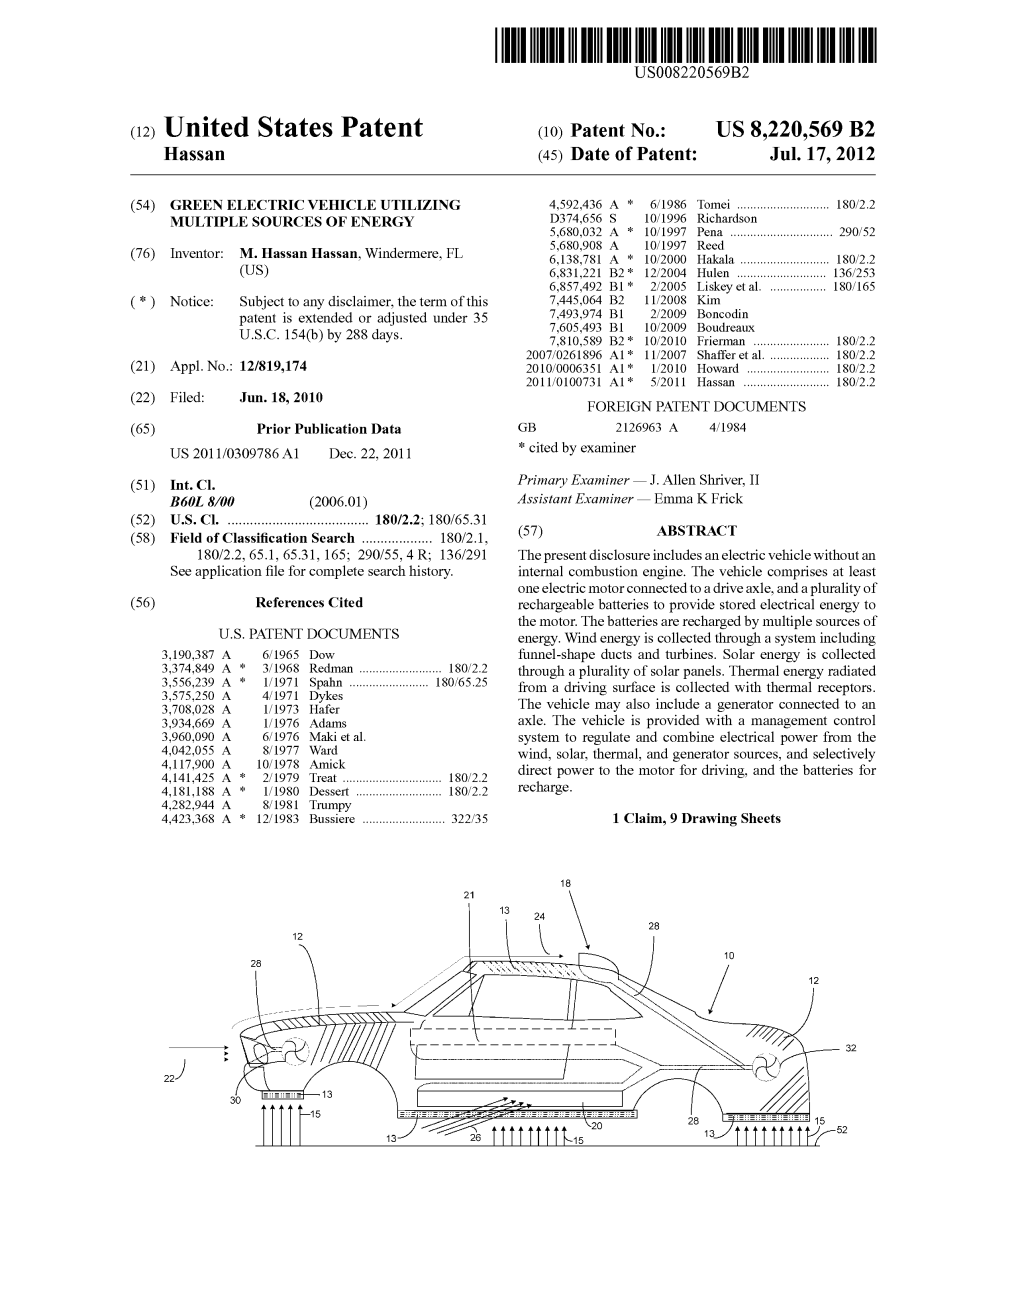 (12) United States Patent (10) Patent No.: US 8,220,569 B2 Hassan (45) Date of Patent: Jul